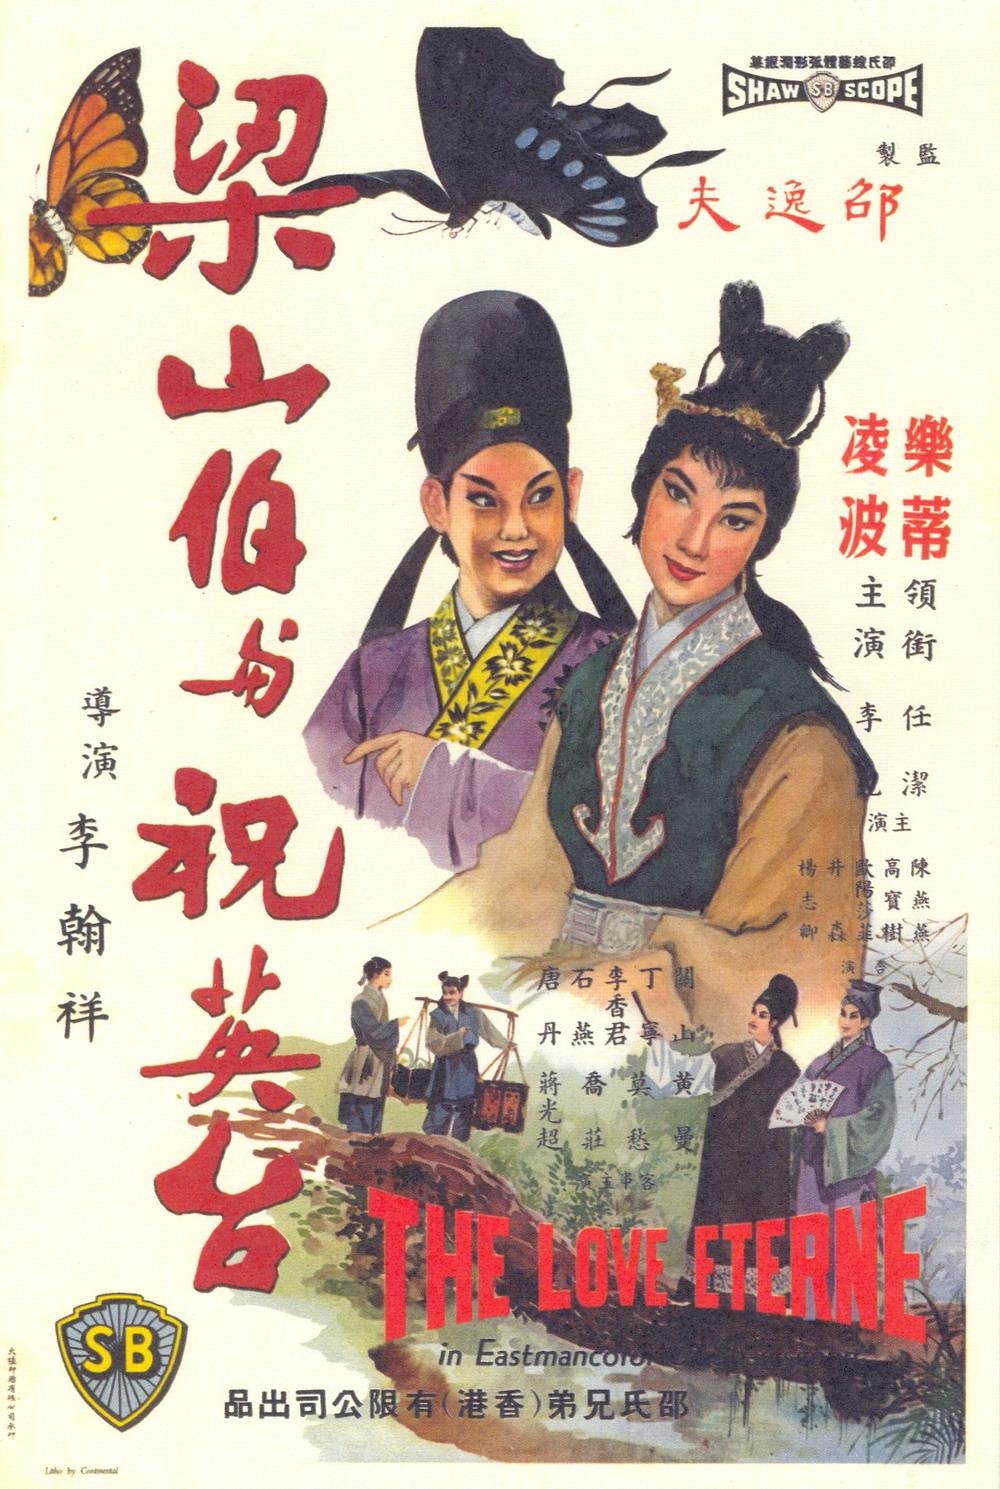 L'affiche originale du film The Love Eterne en mandarin